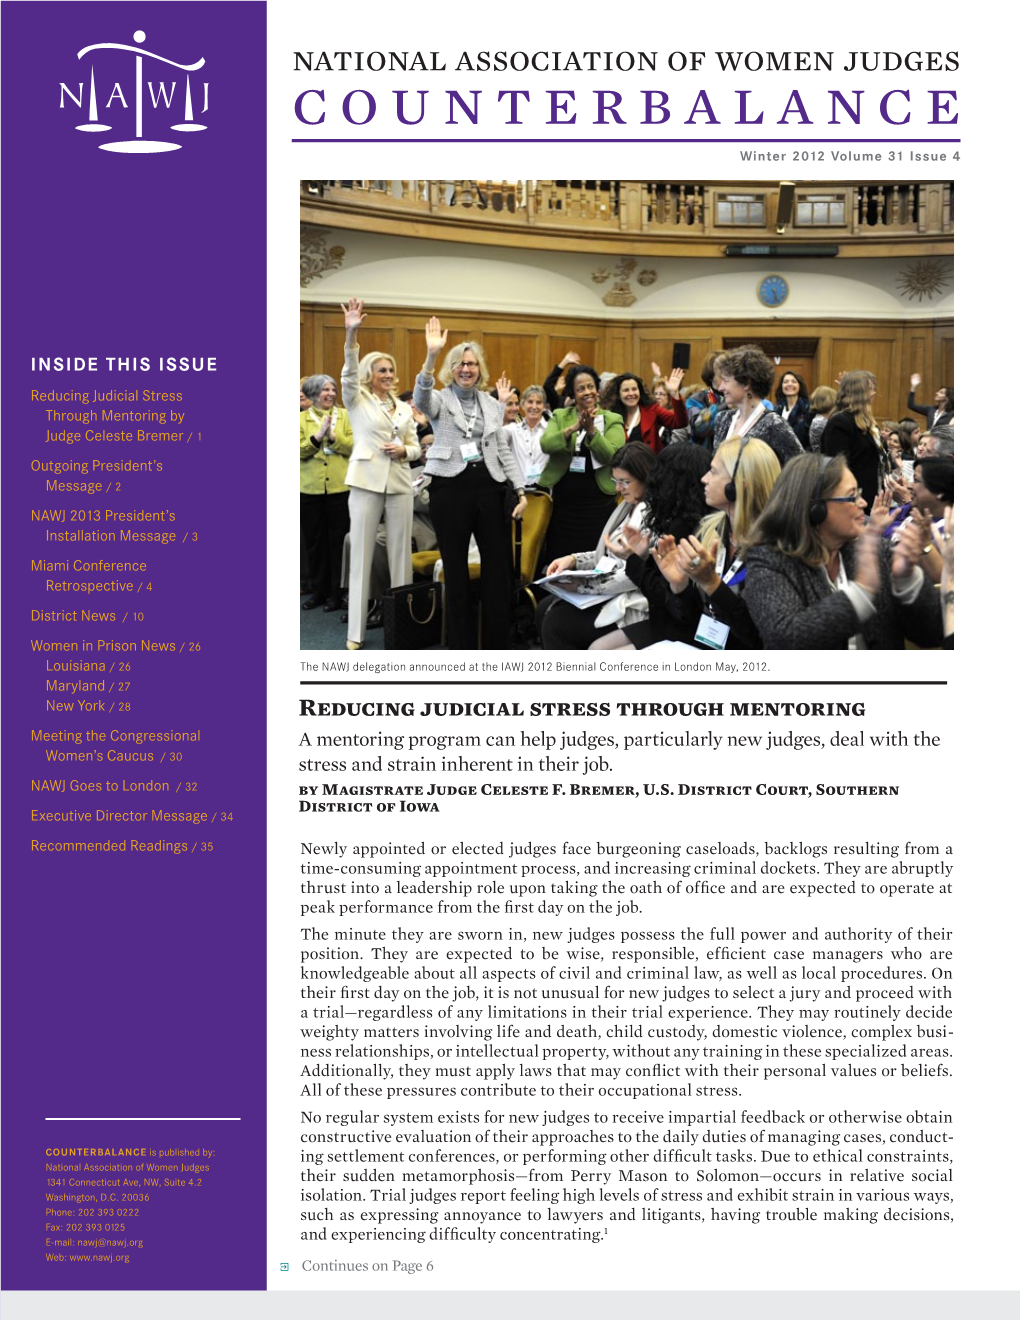 National Association of Women Judges Counterbalance Winter 2012 Volume 31 Issue 4